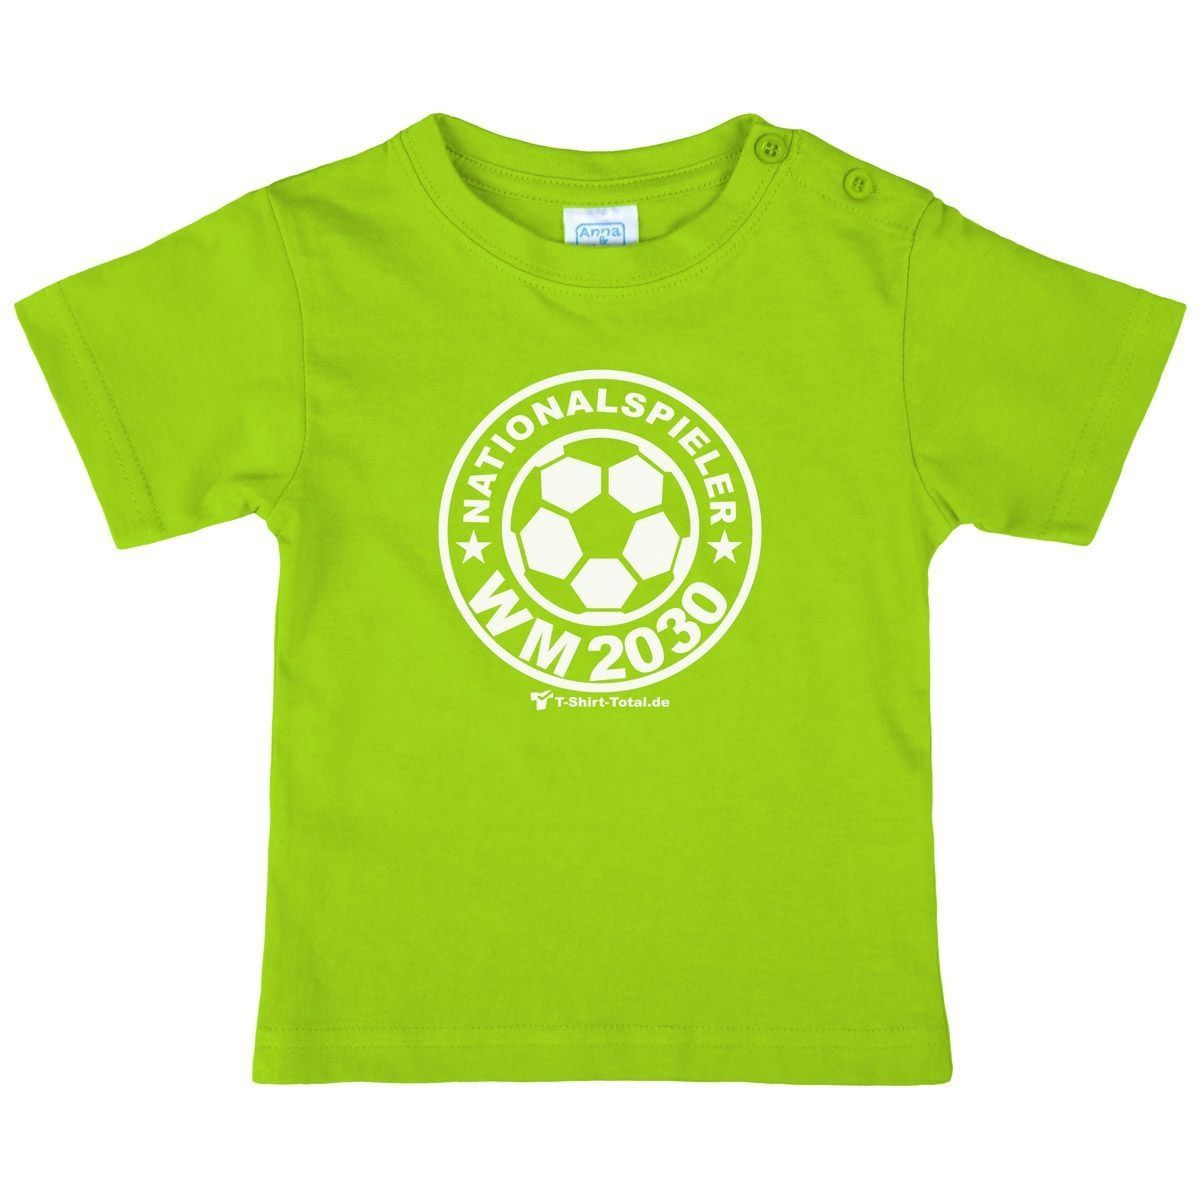 Nationalspieler 2042 Kinder T-Shirt hellgrün 104